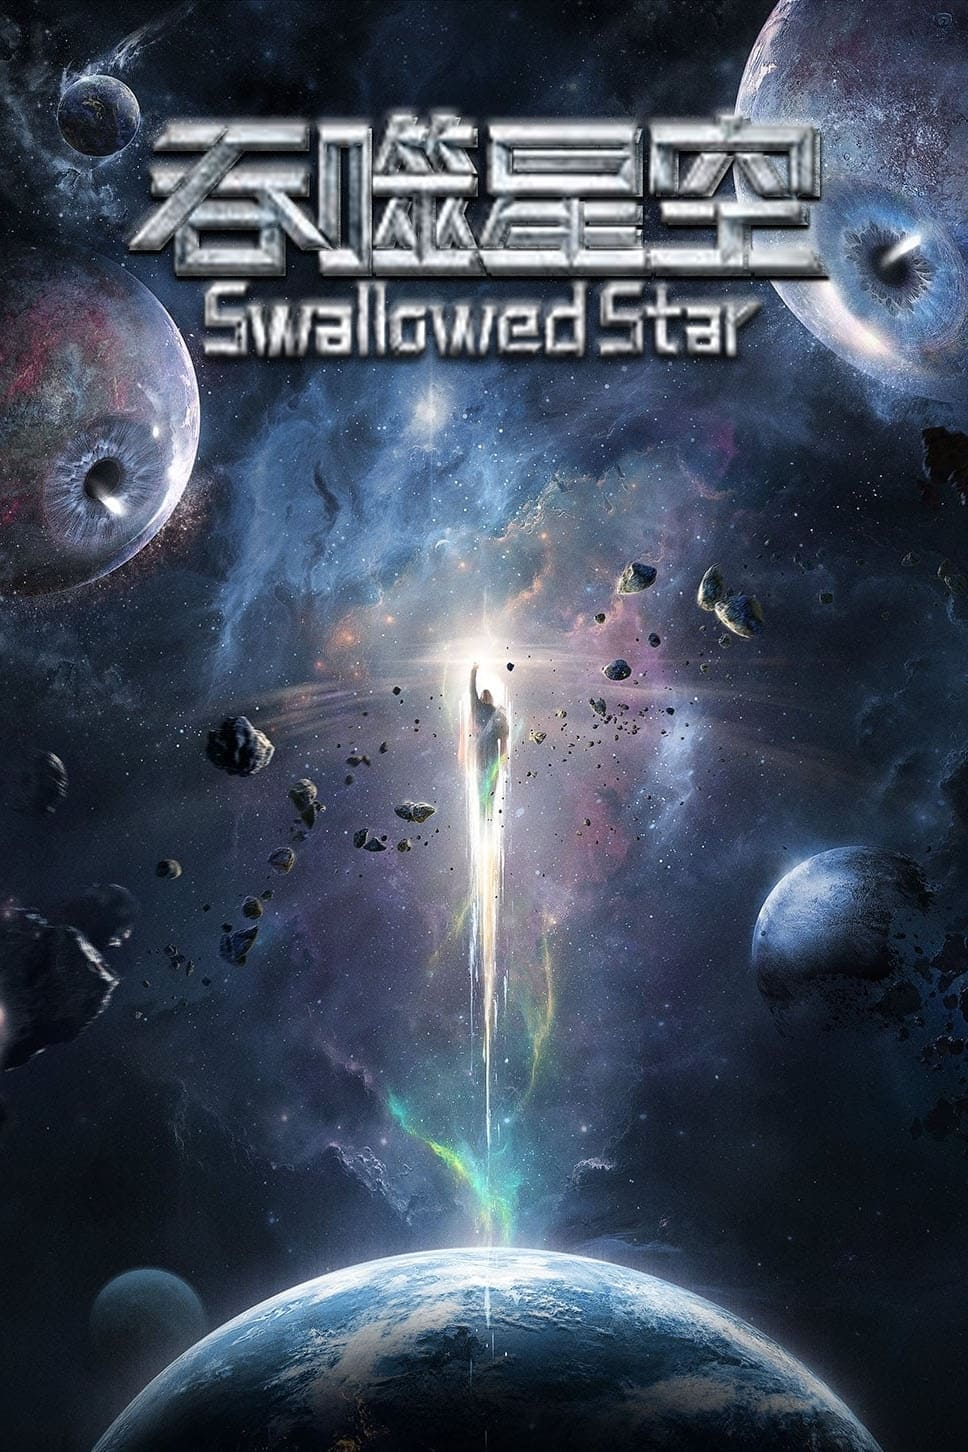 Assistir Swallowed Star – 2ª e 3ª Temporada Online em HD